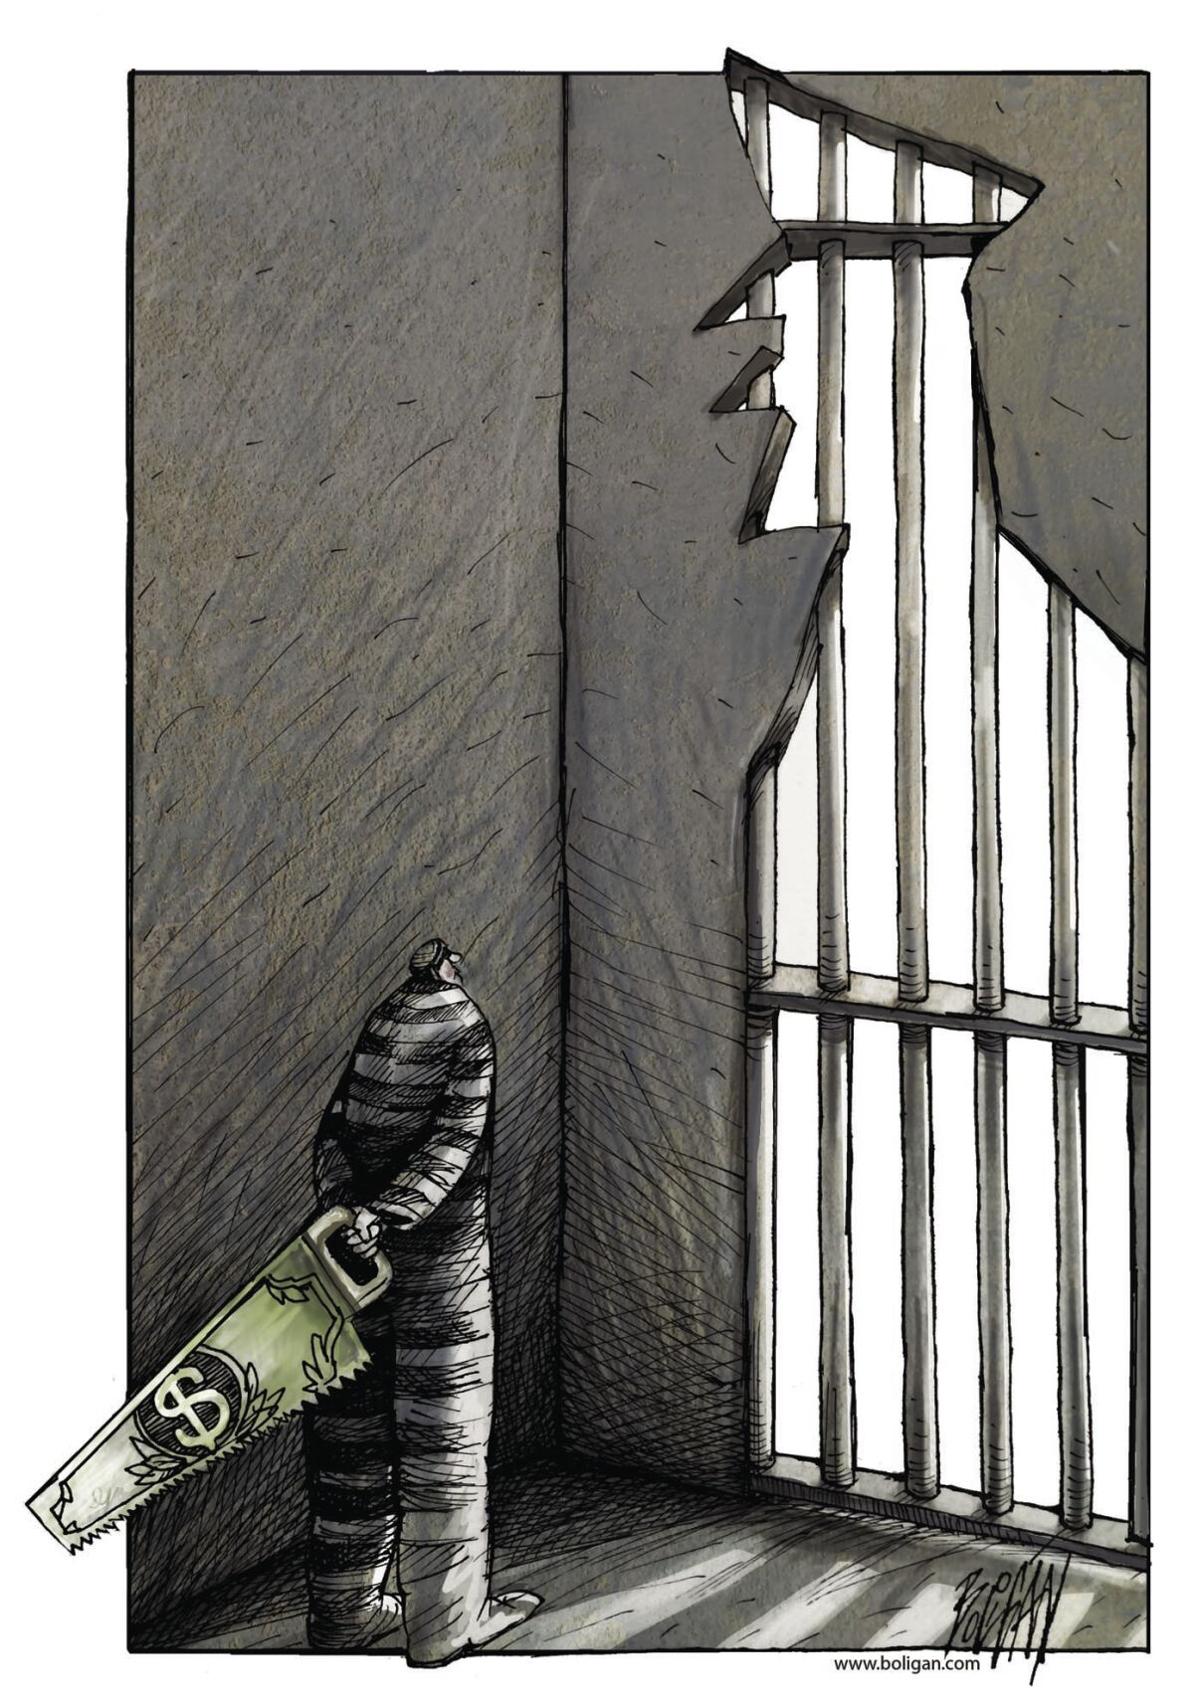 art_prison_boligan